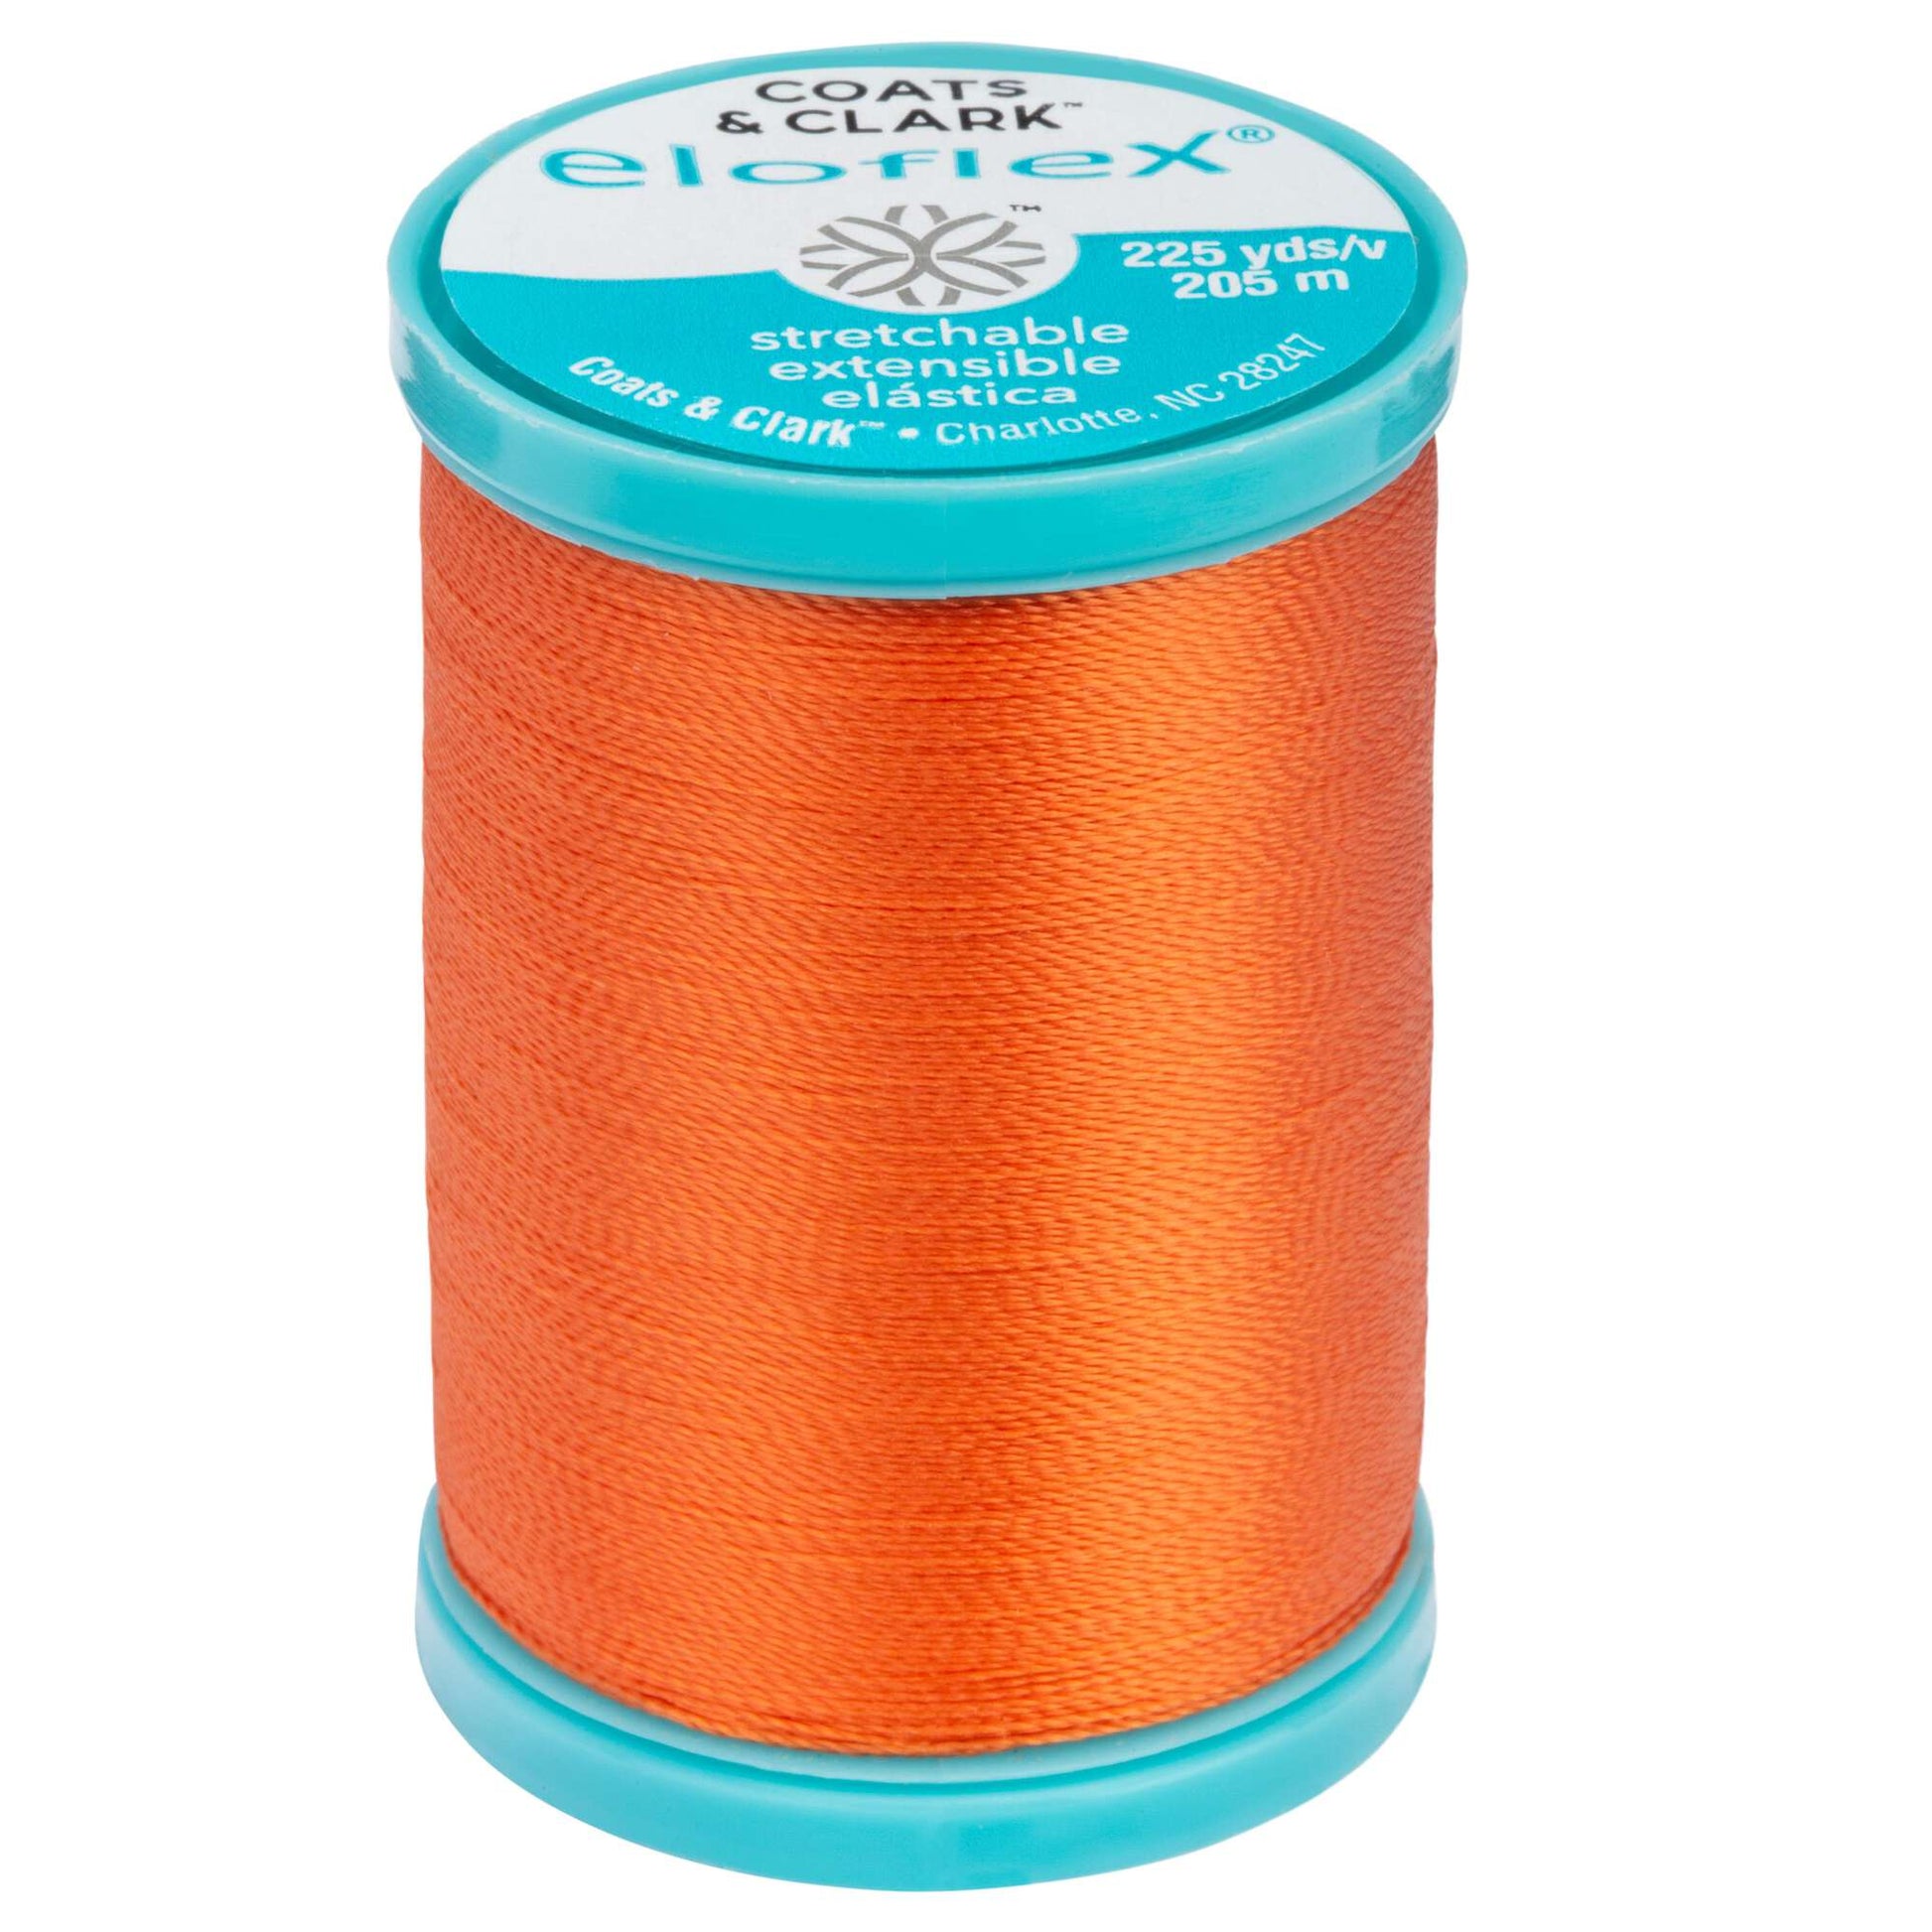 Coats & Clark Eloflex Stretchable Thread (225 Yards)